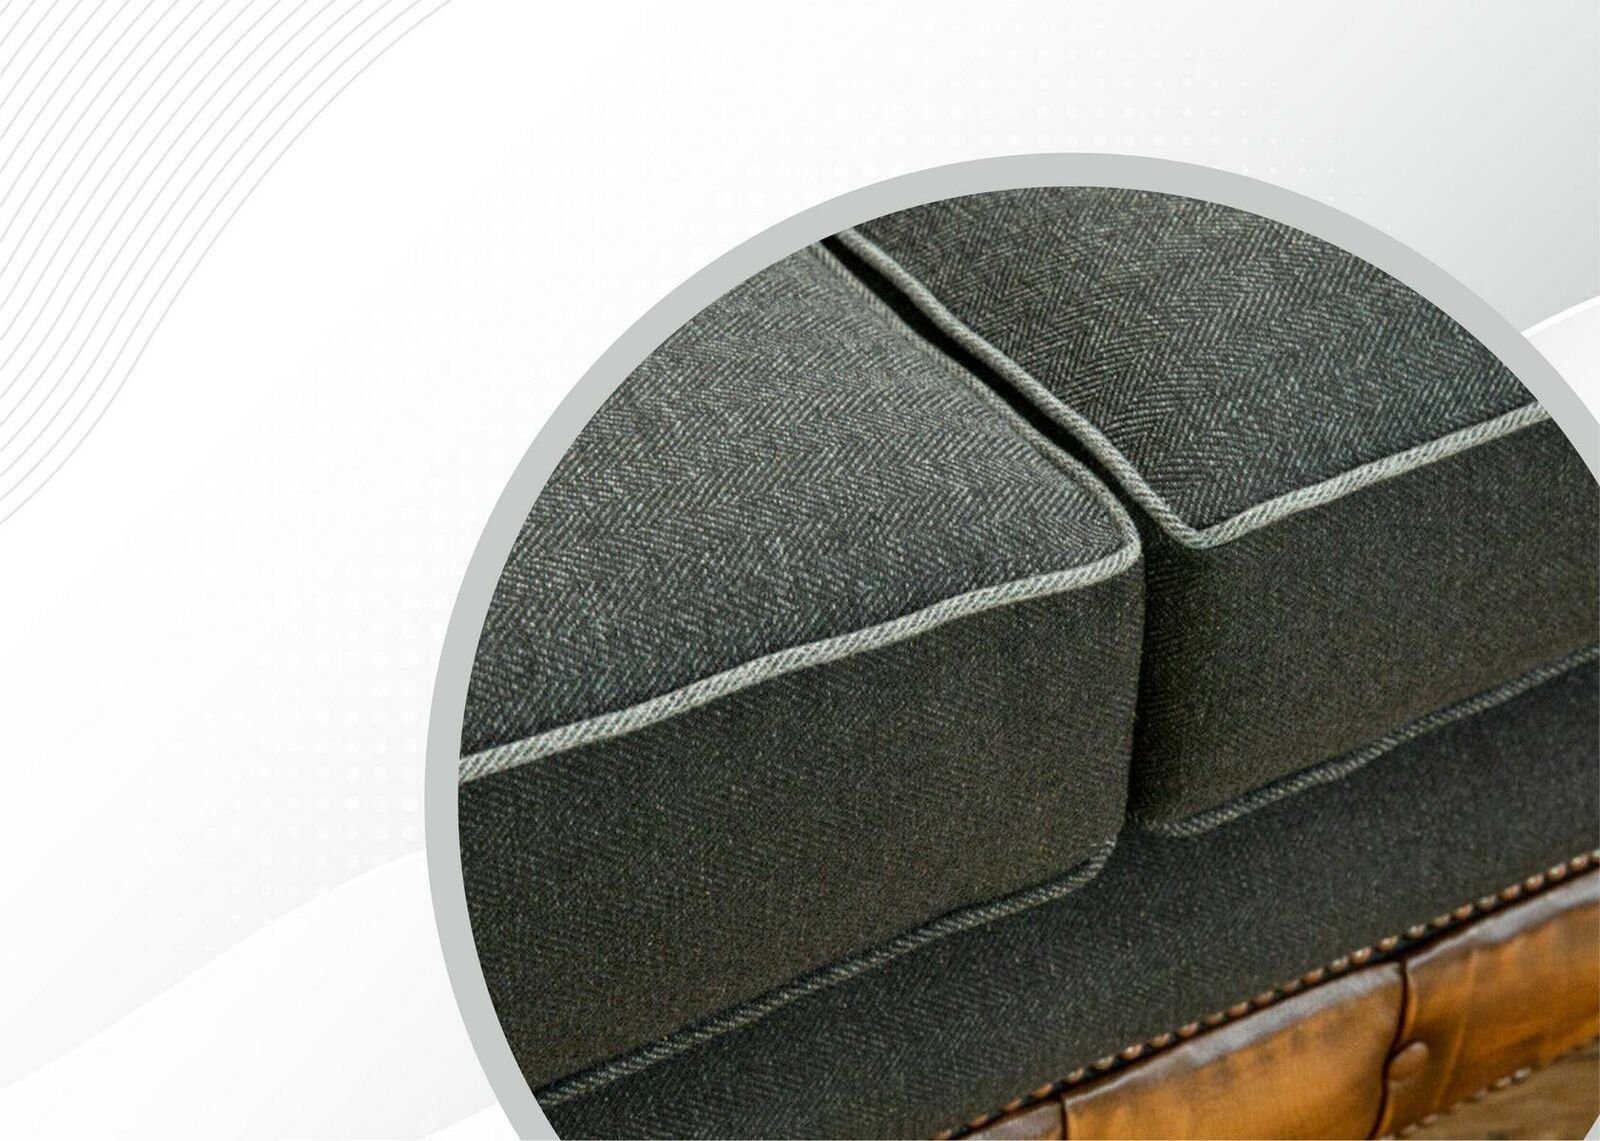 JVmoebel Chesterfield-Sofa Moderne Chesterfield Couch in 3-Sitzer Neu, Europe Made Luxus Design bunter